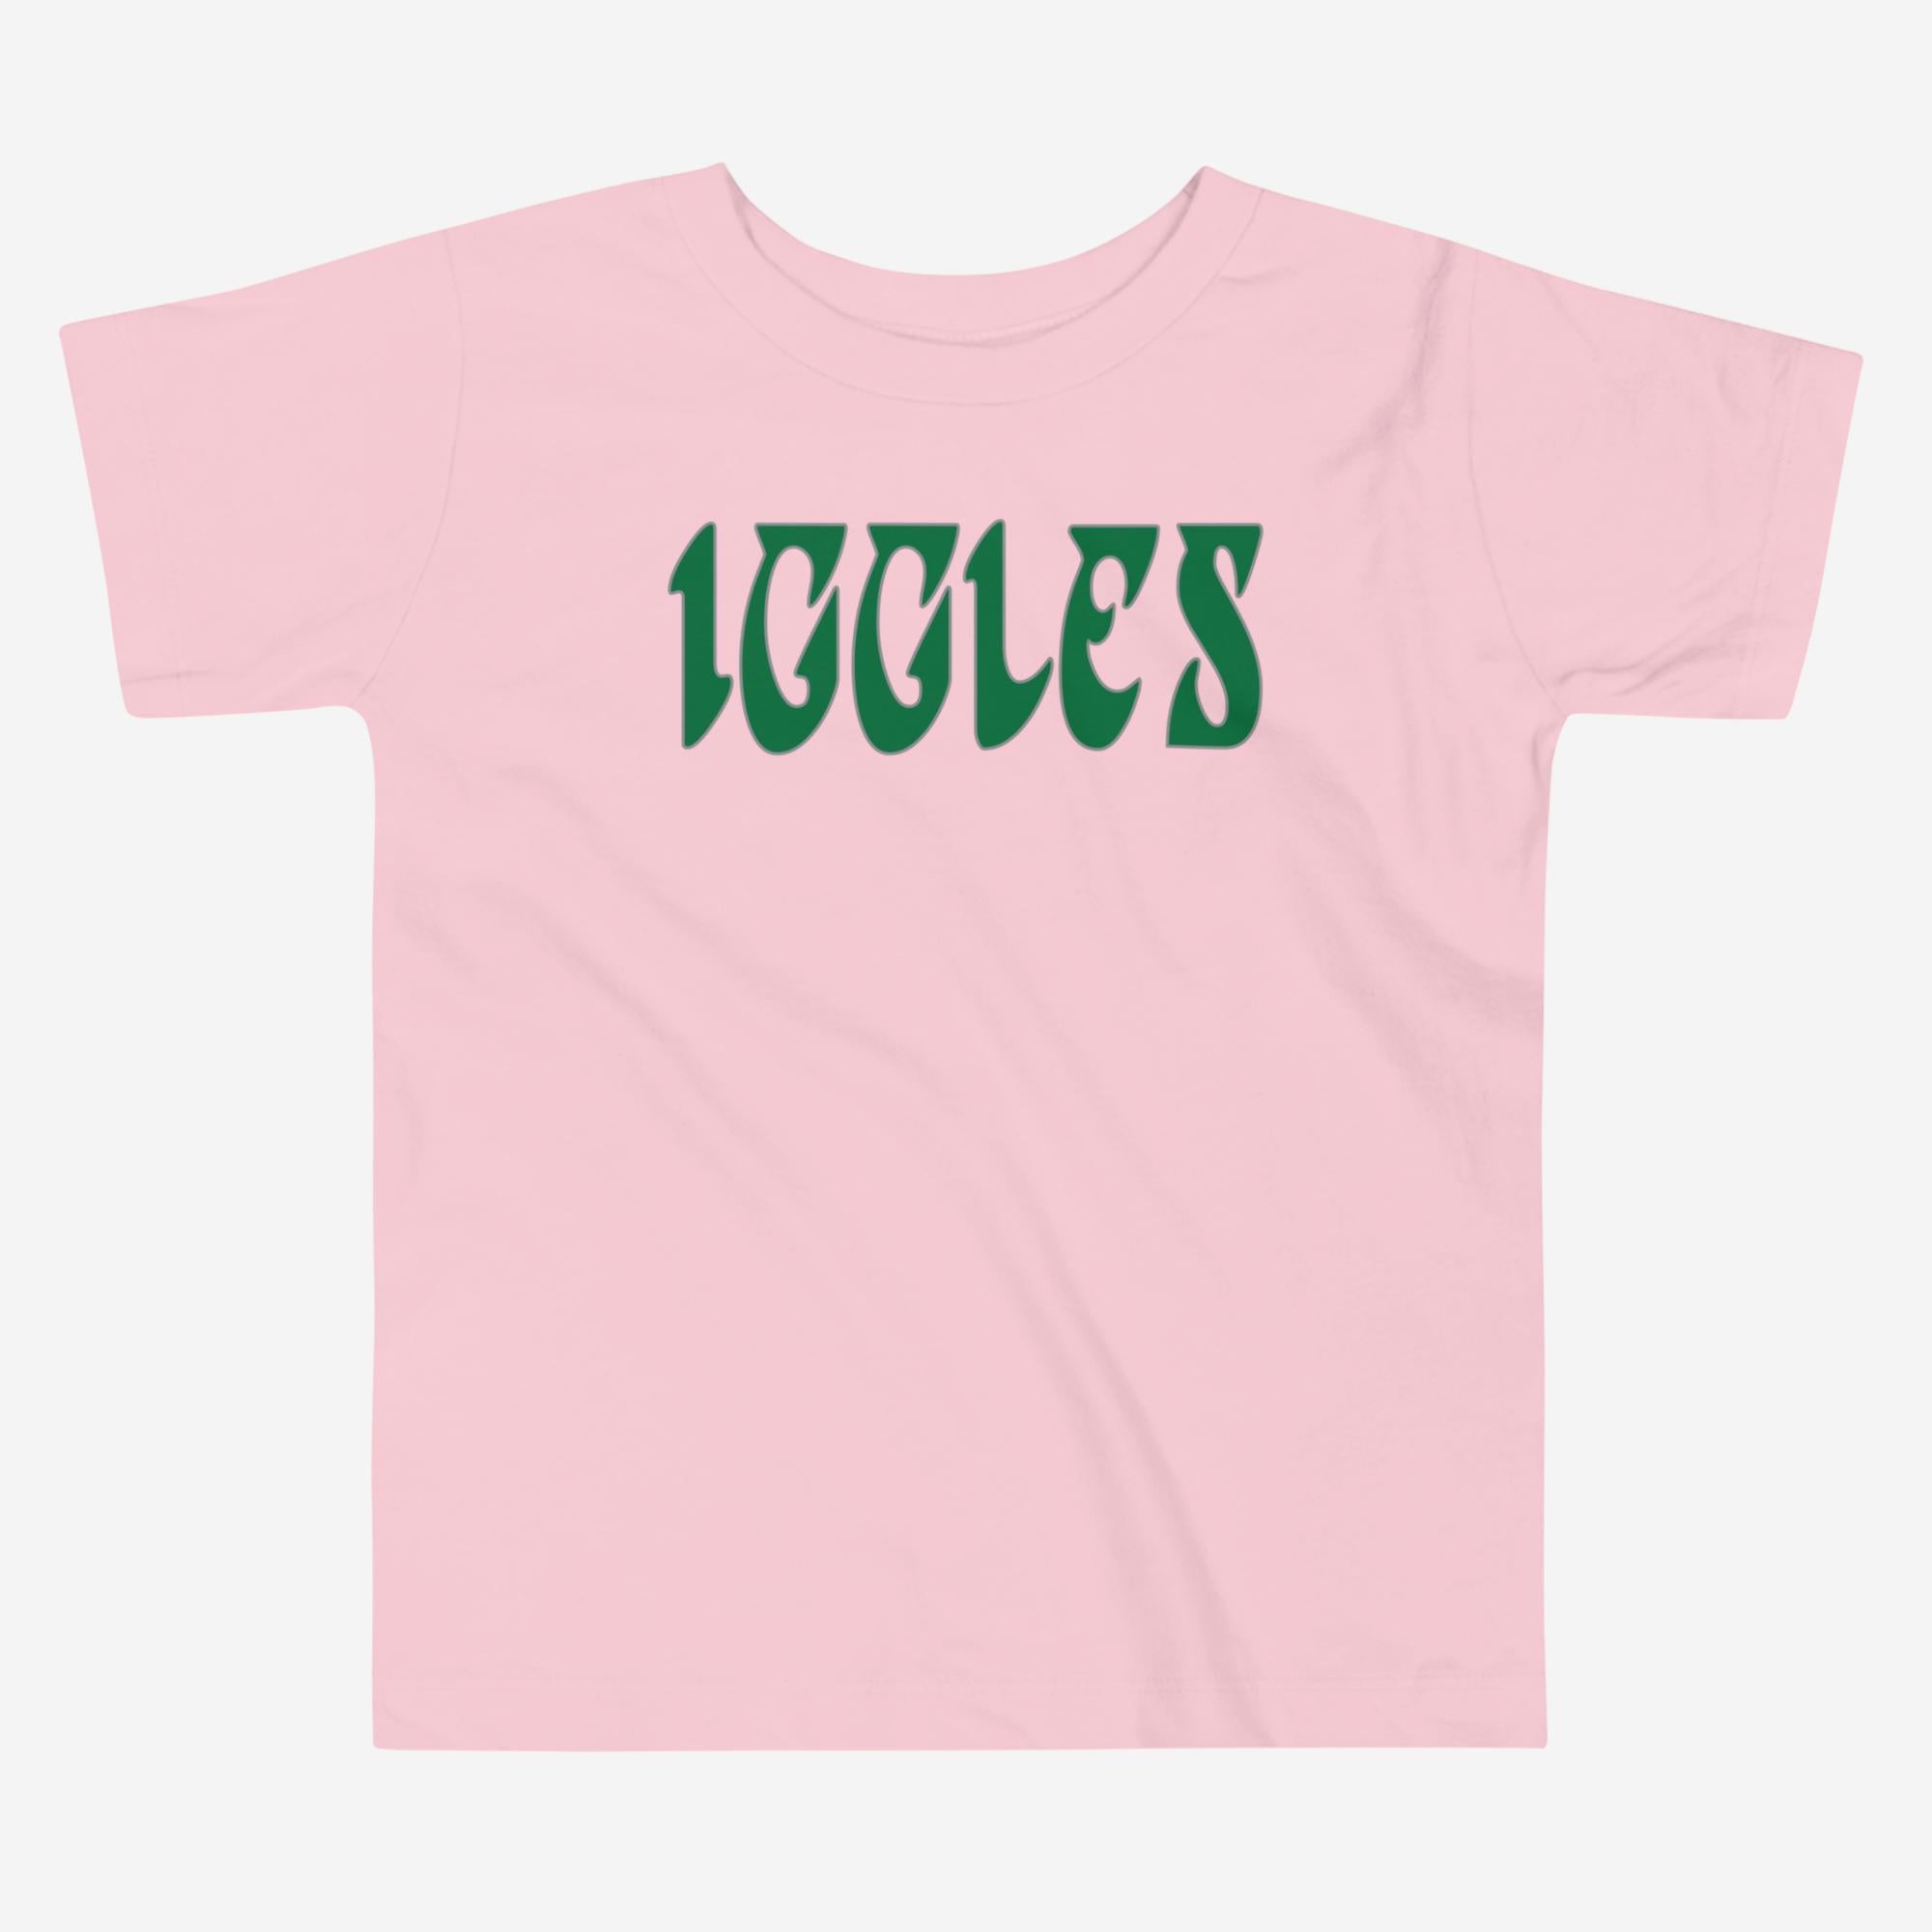 "Iggles" Toddler Tee